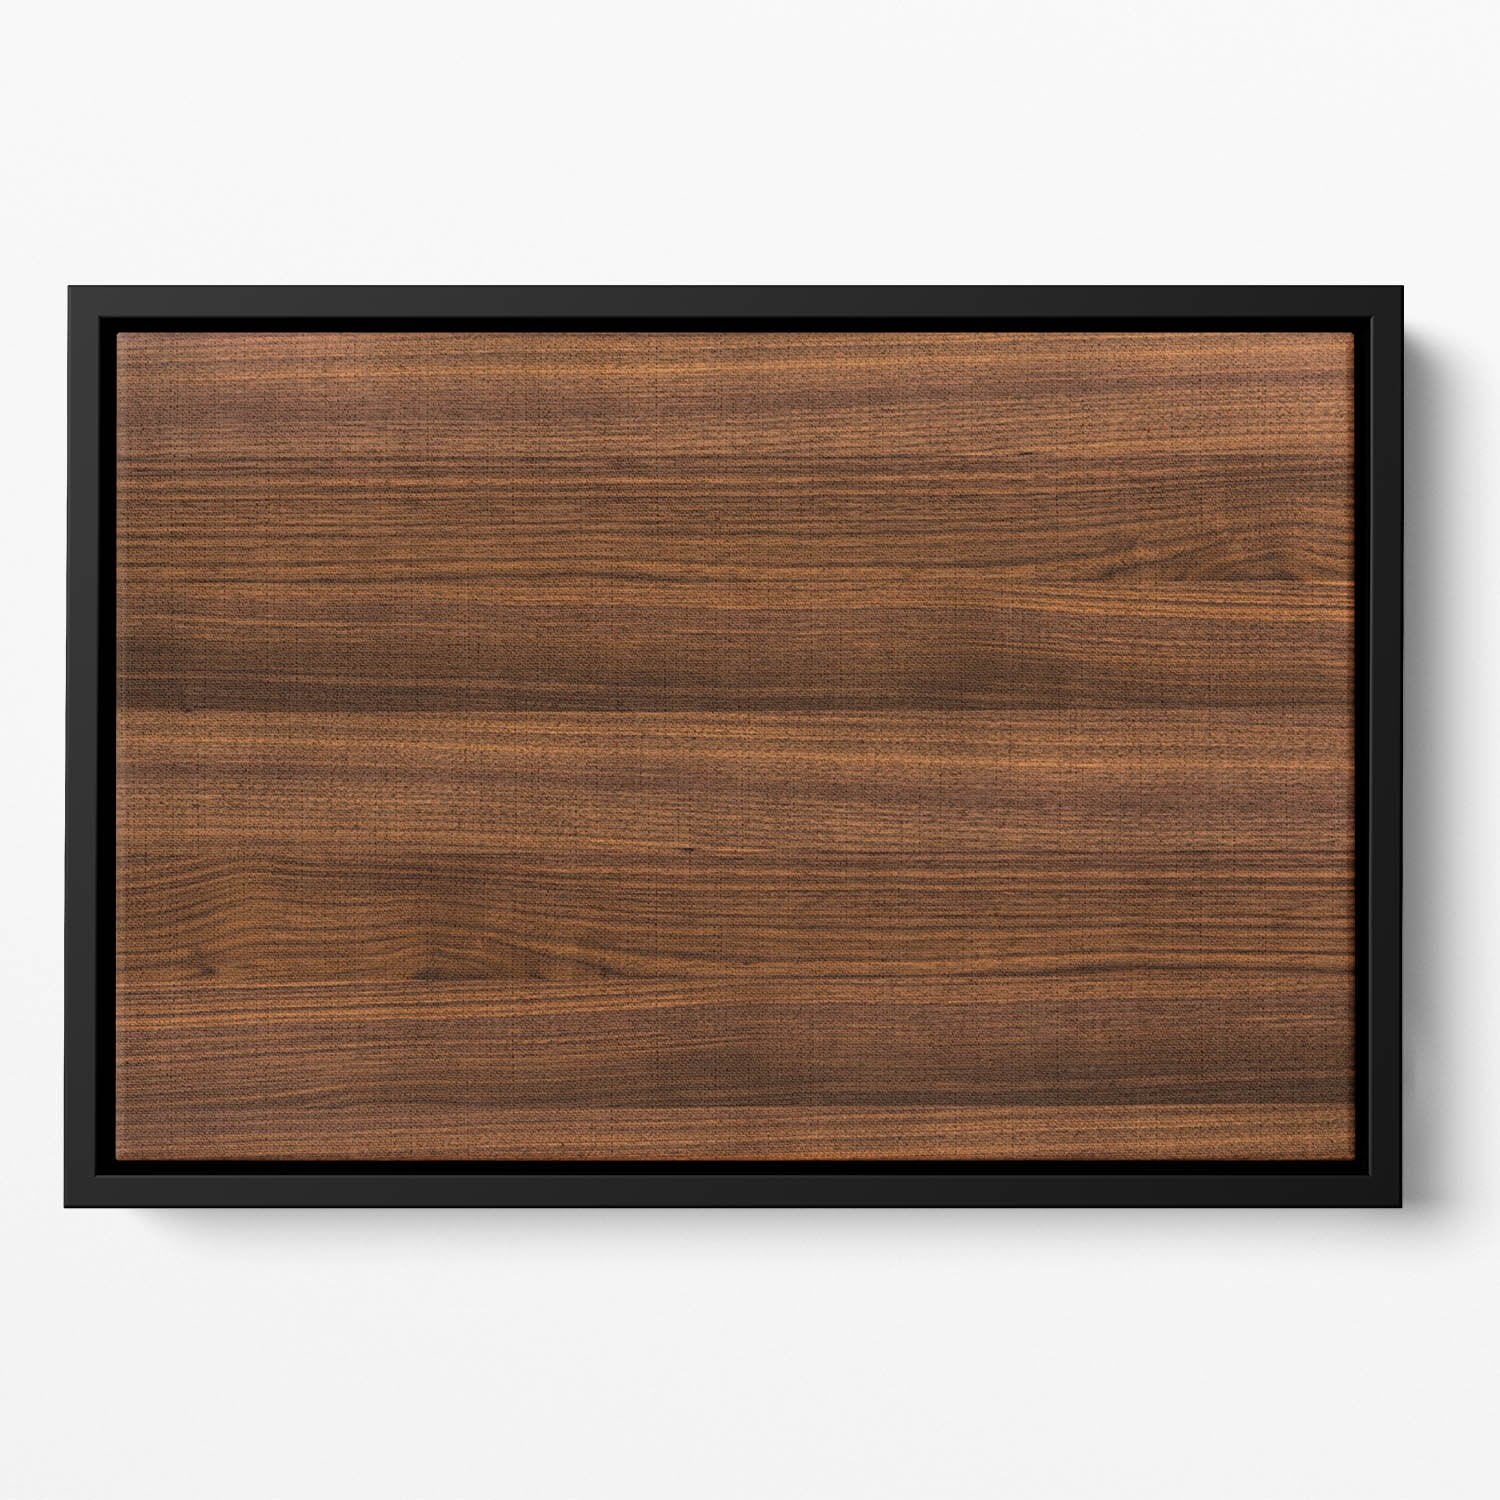 Walnut wood decorative Floating Framed Canvas